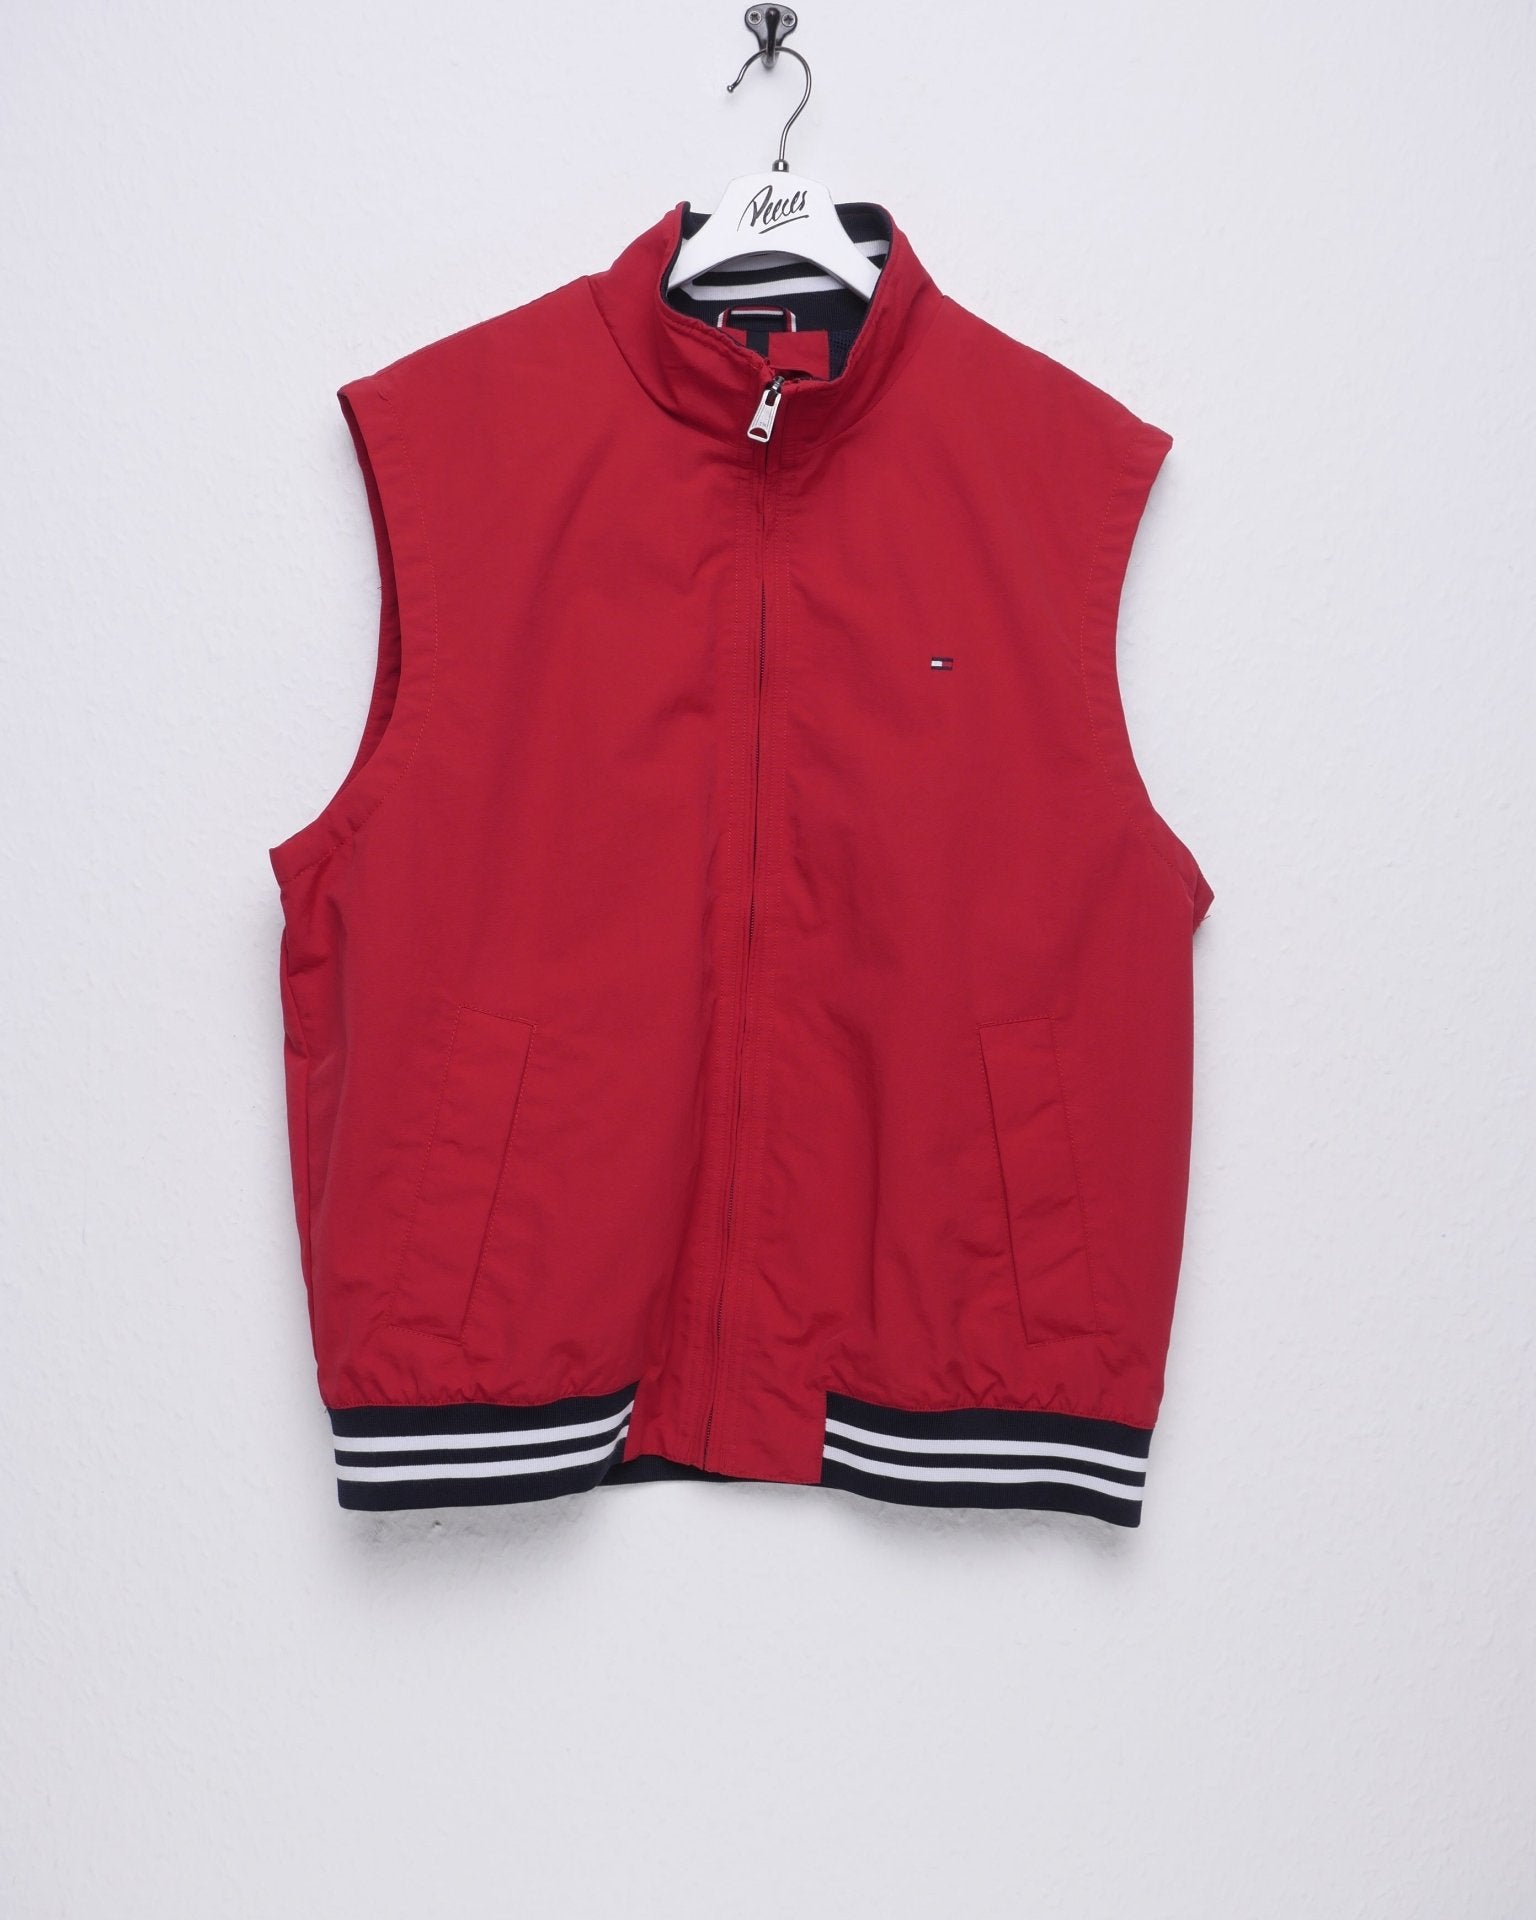 tommy hilfiger embroidered Logo red vest Jacke - Peeces